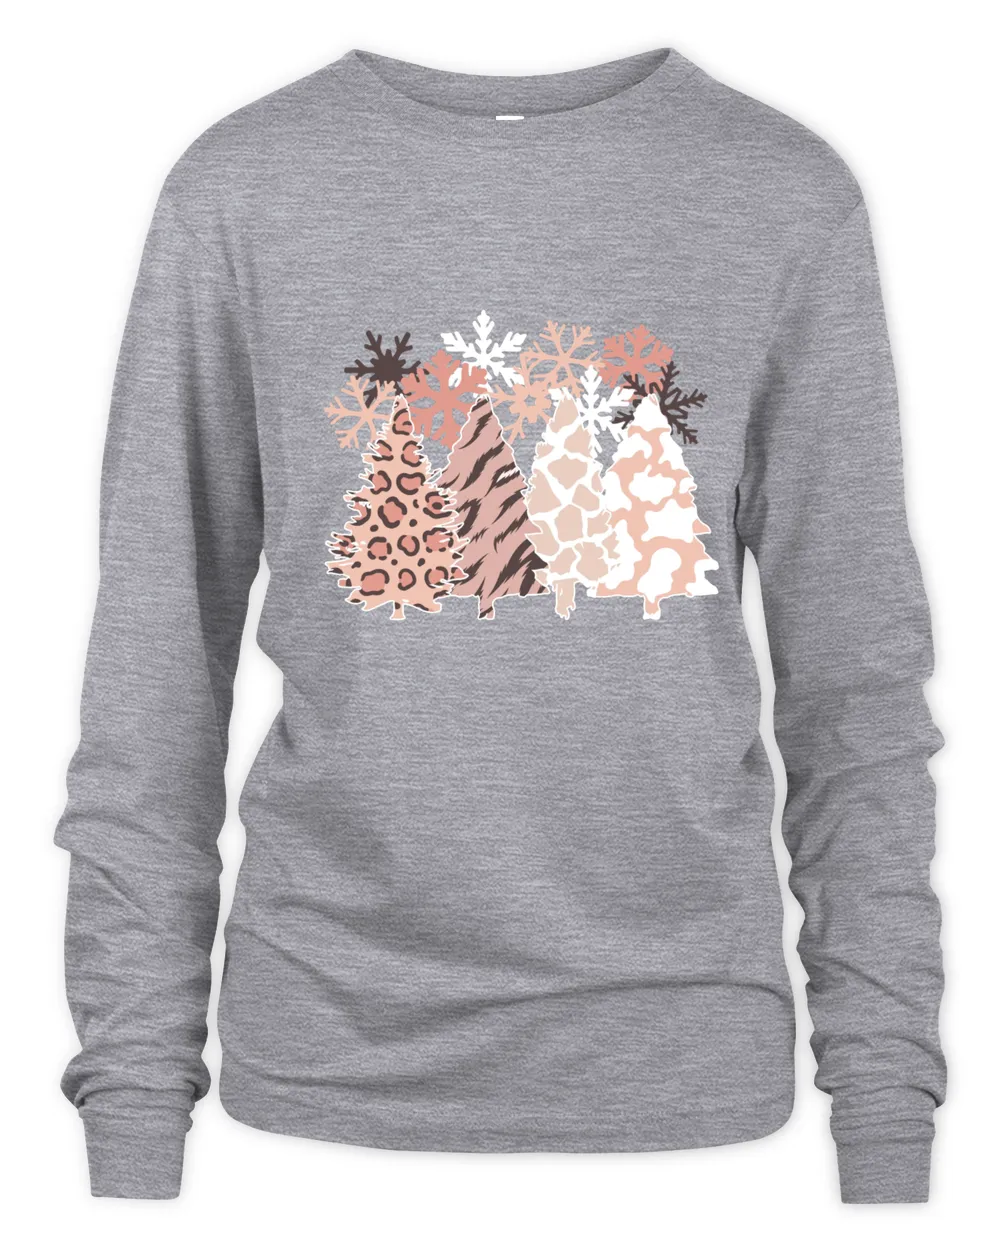 Merry Christmas Girl Shirt Snowflakes Pine Tree